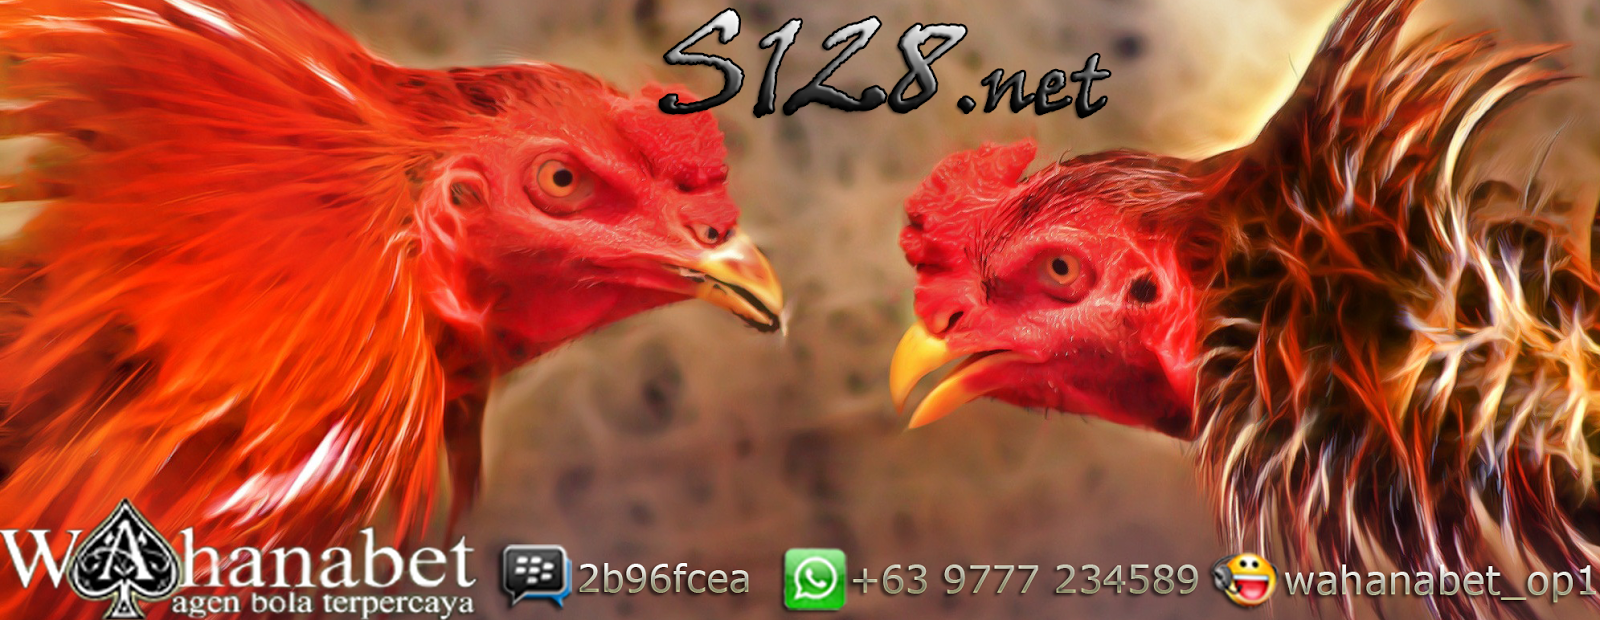 Agen Sabung Ayam Online Indonesia